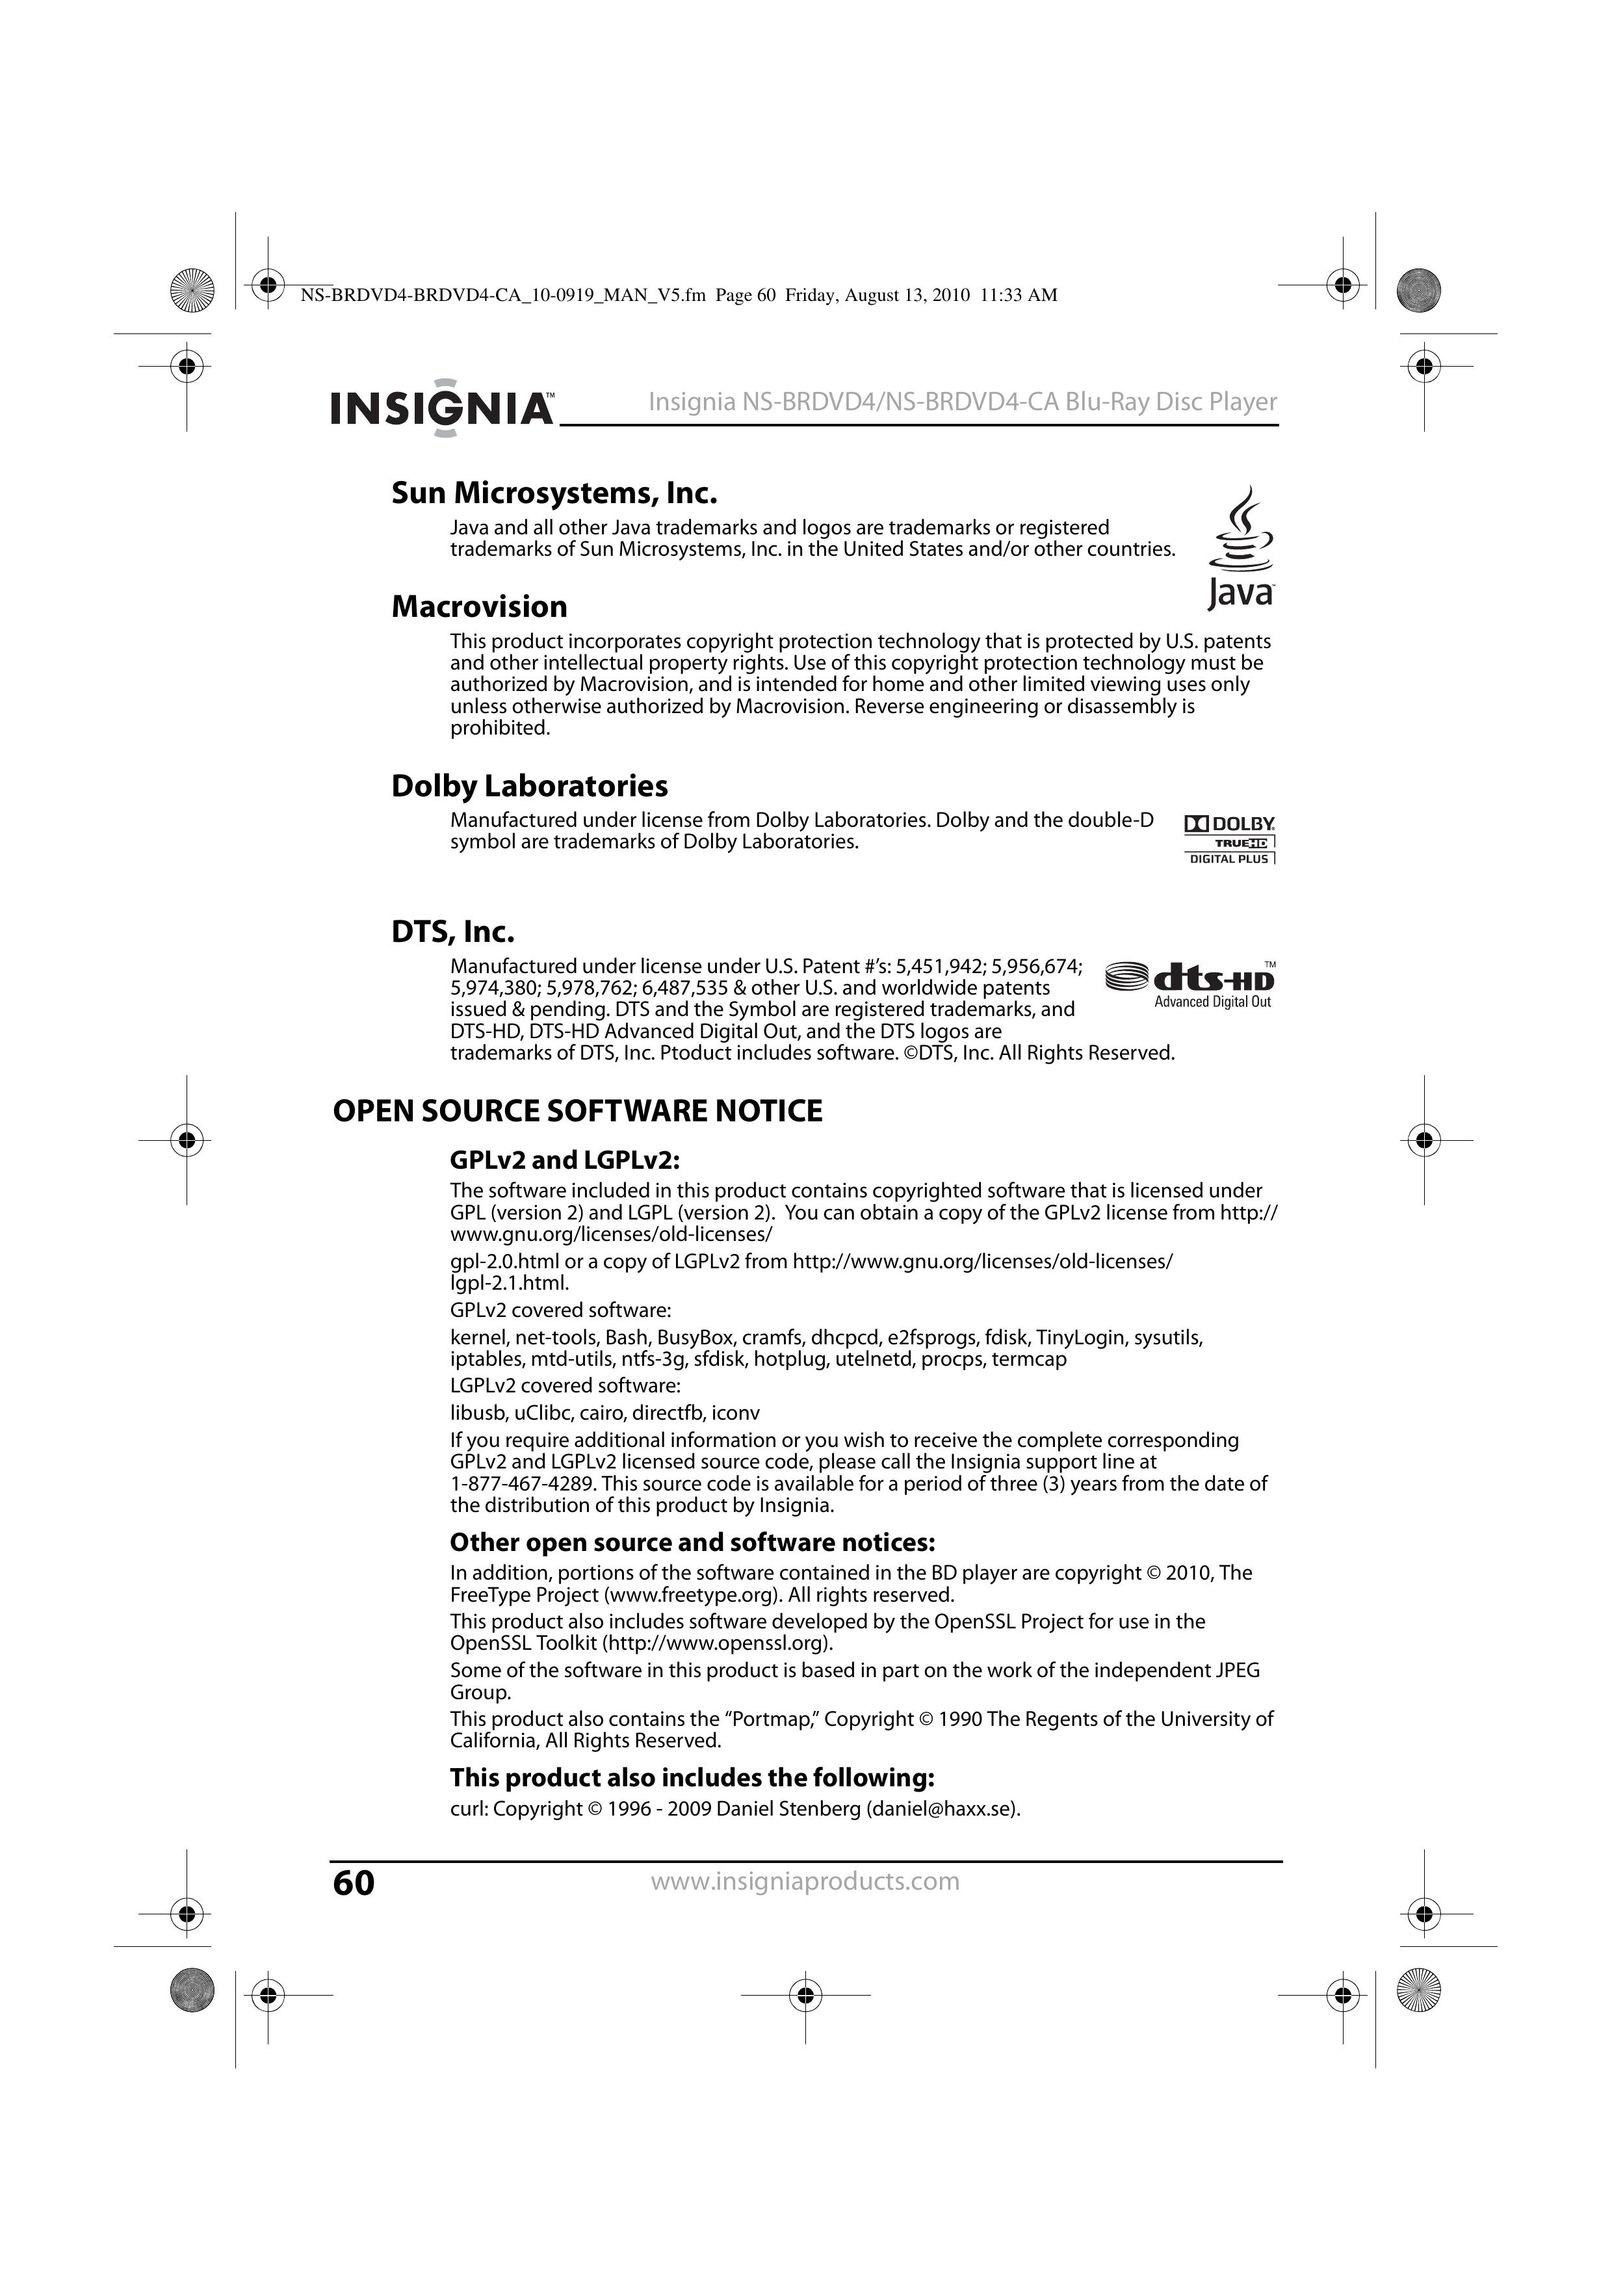 Insignia NS-BRDVD4 Blu-ray Player User Manual (Page 60)